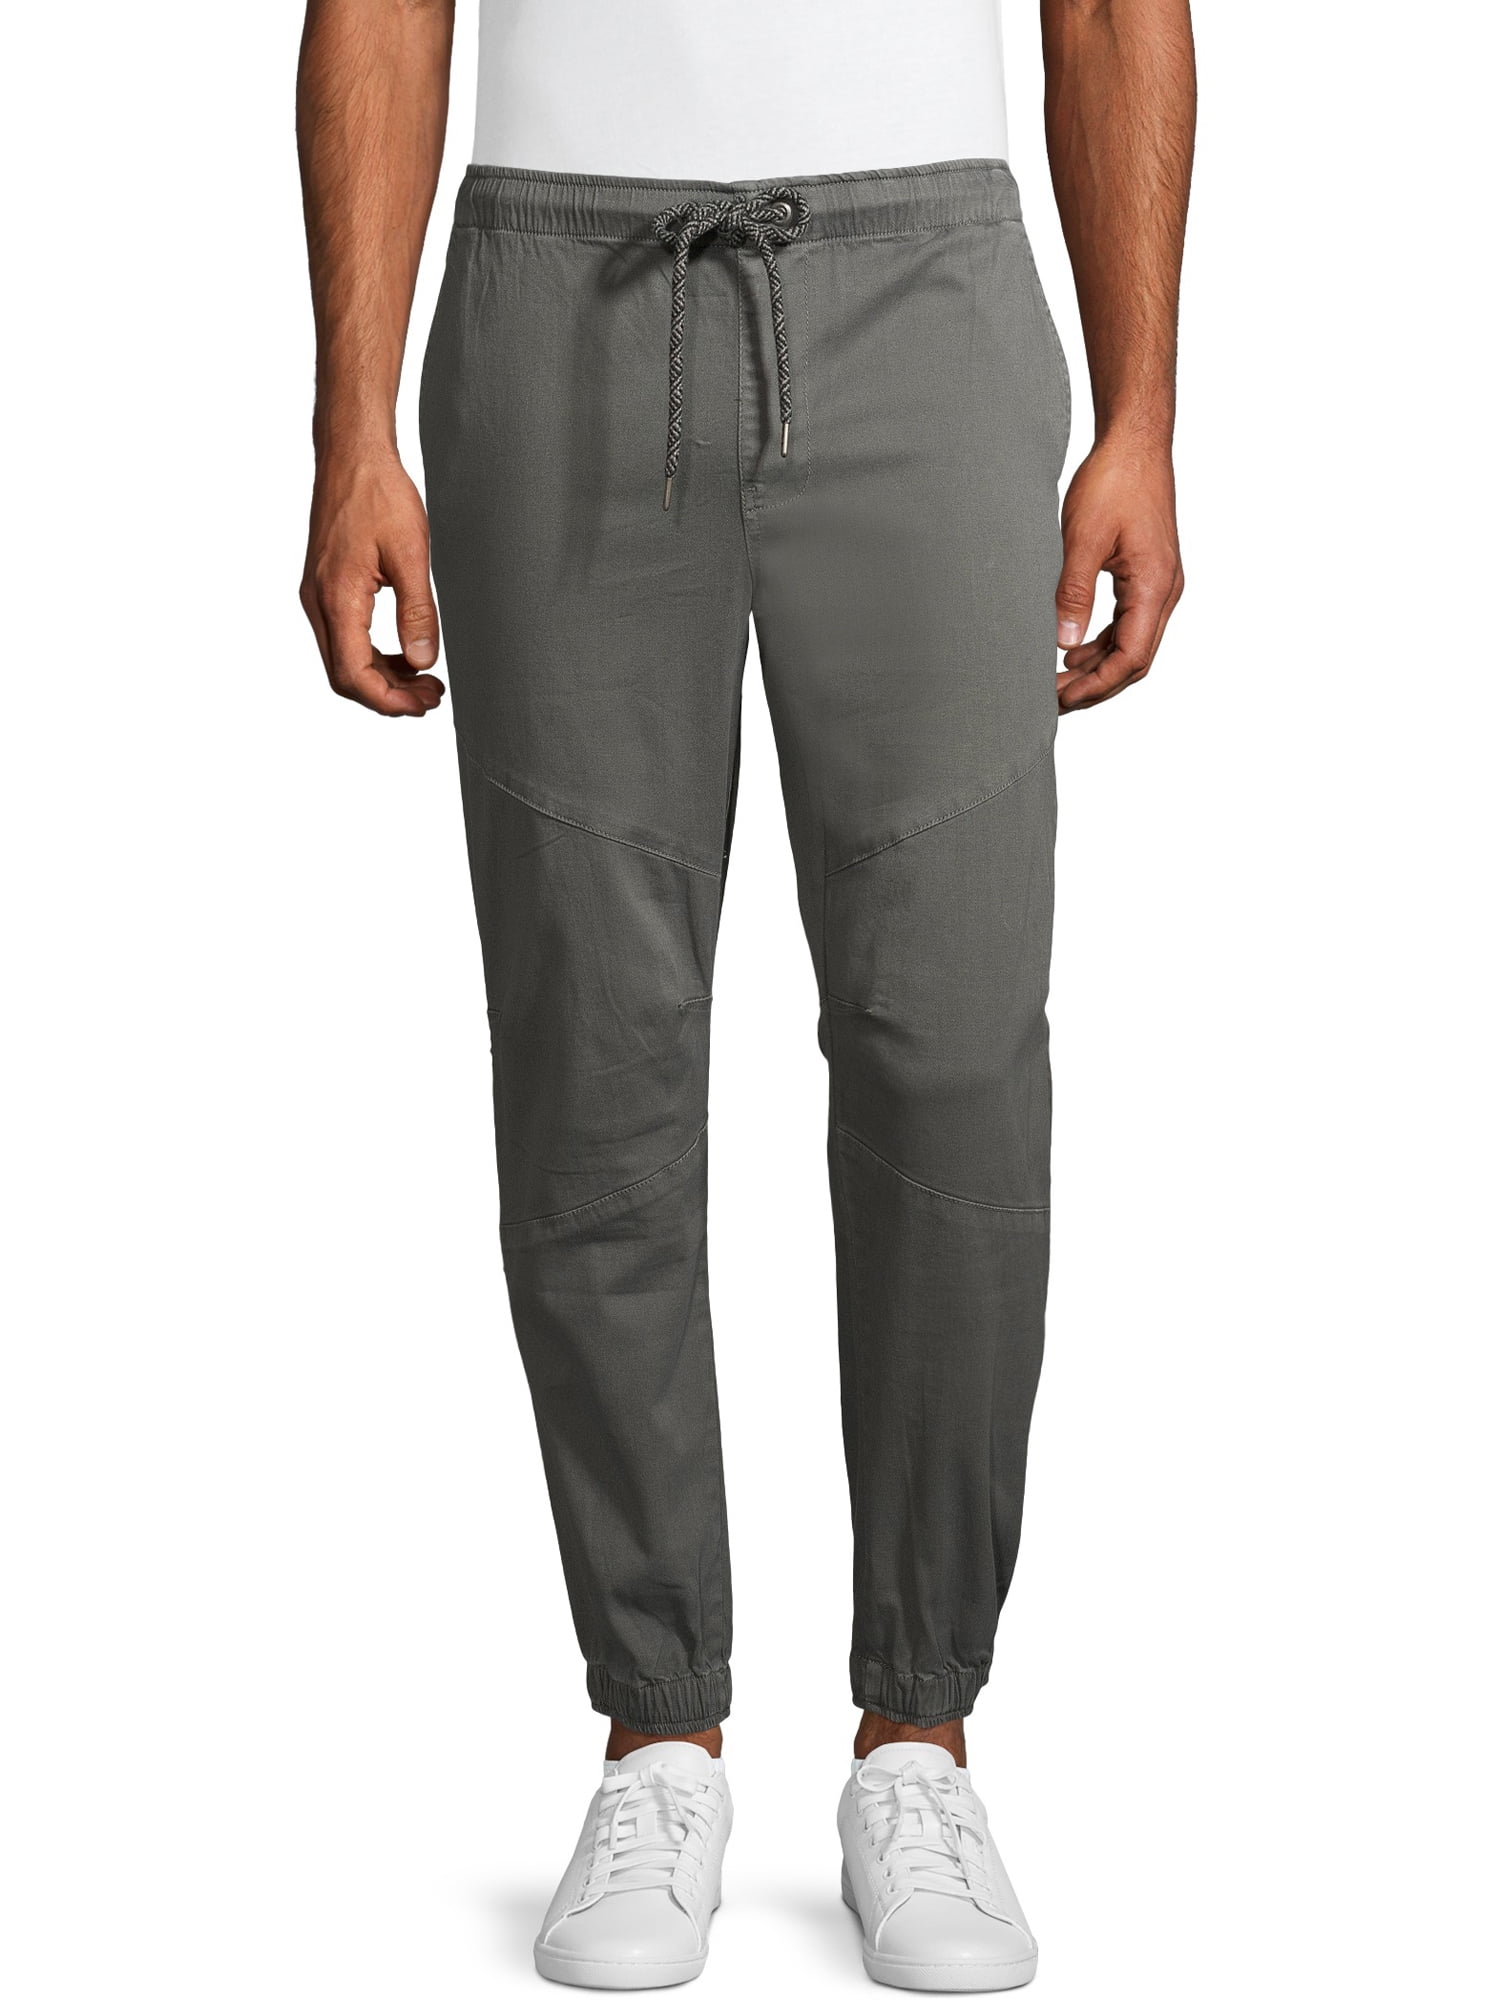 Men's Pull-On Stretch Twill Jogger Pants, Mens Pants Walmart.com